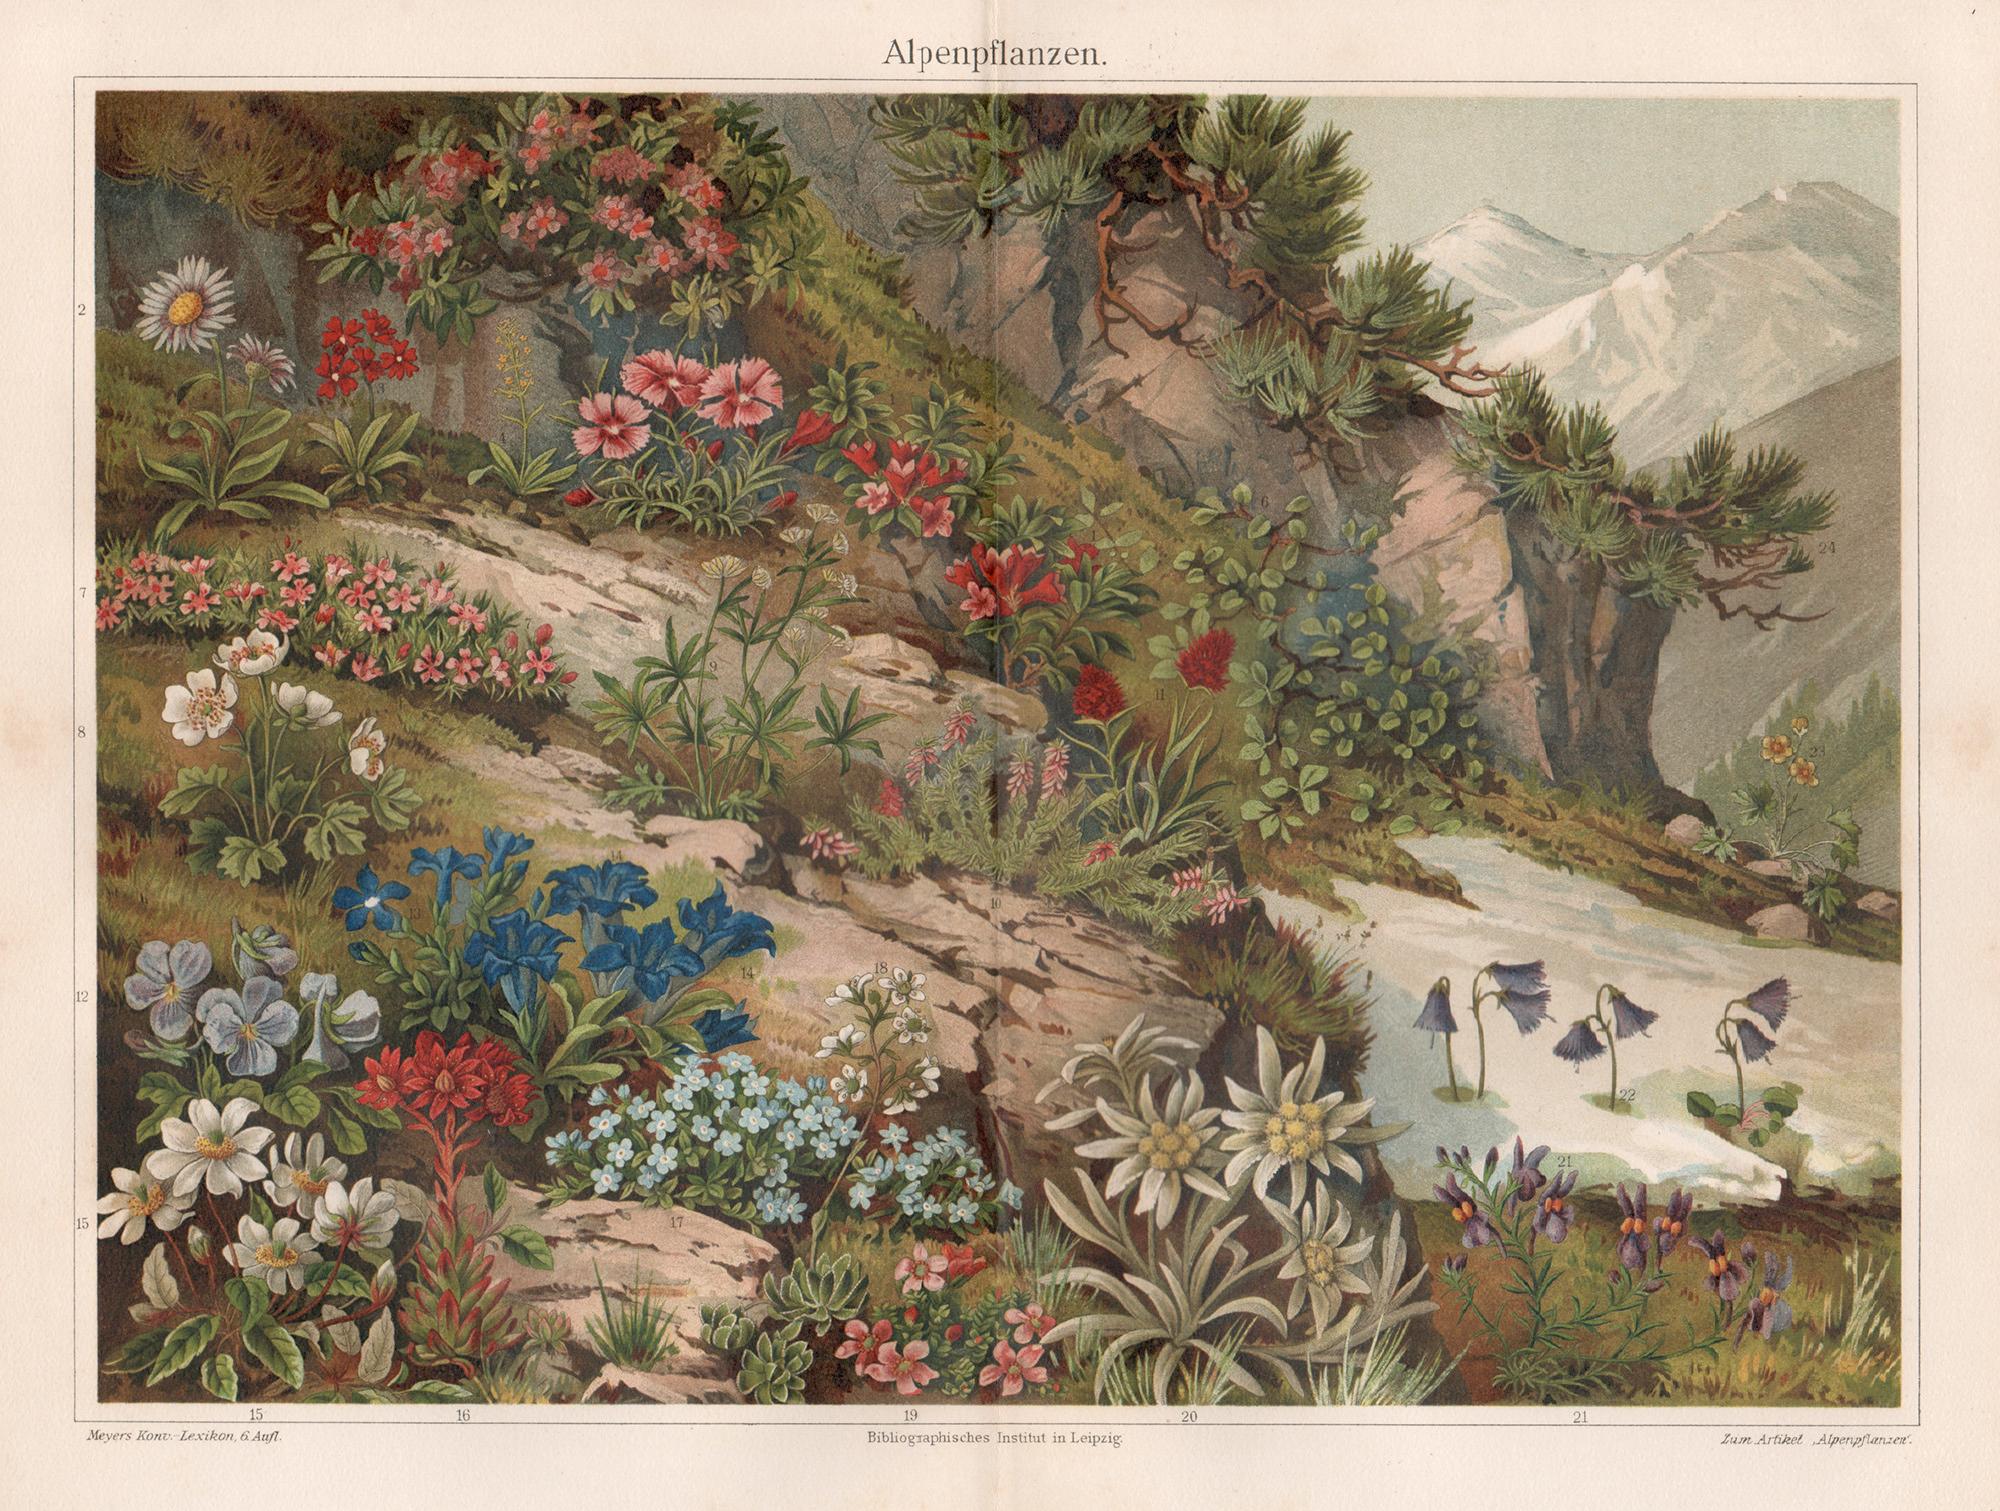 Alpenpflanzen (Alpine Plants), German antique botanical chromolithograph print